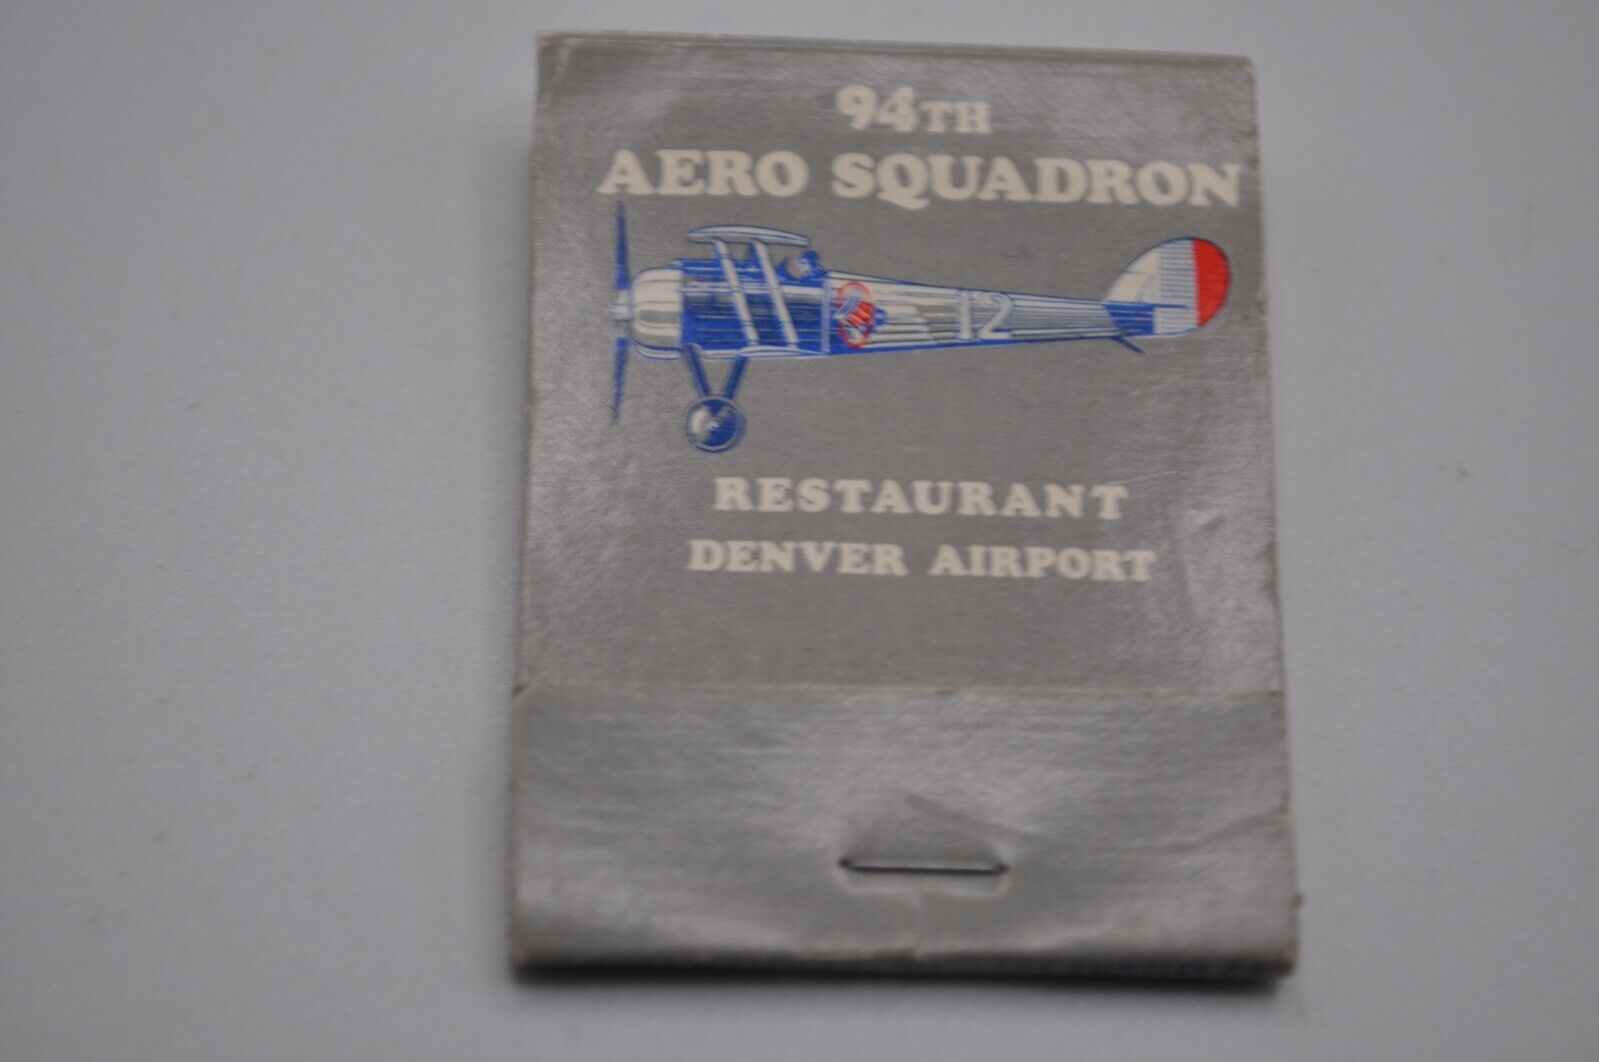 Vintage Matchbook 94th Aero Squadron Restaurant Devner Airport